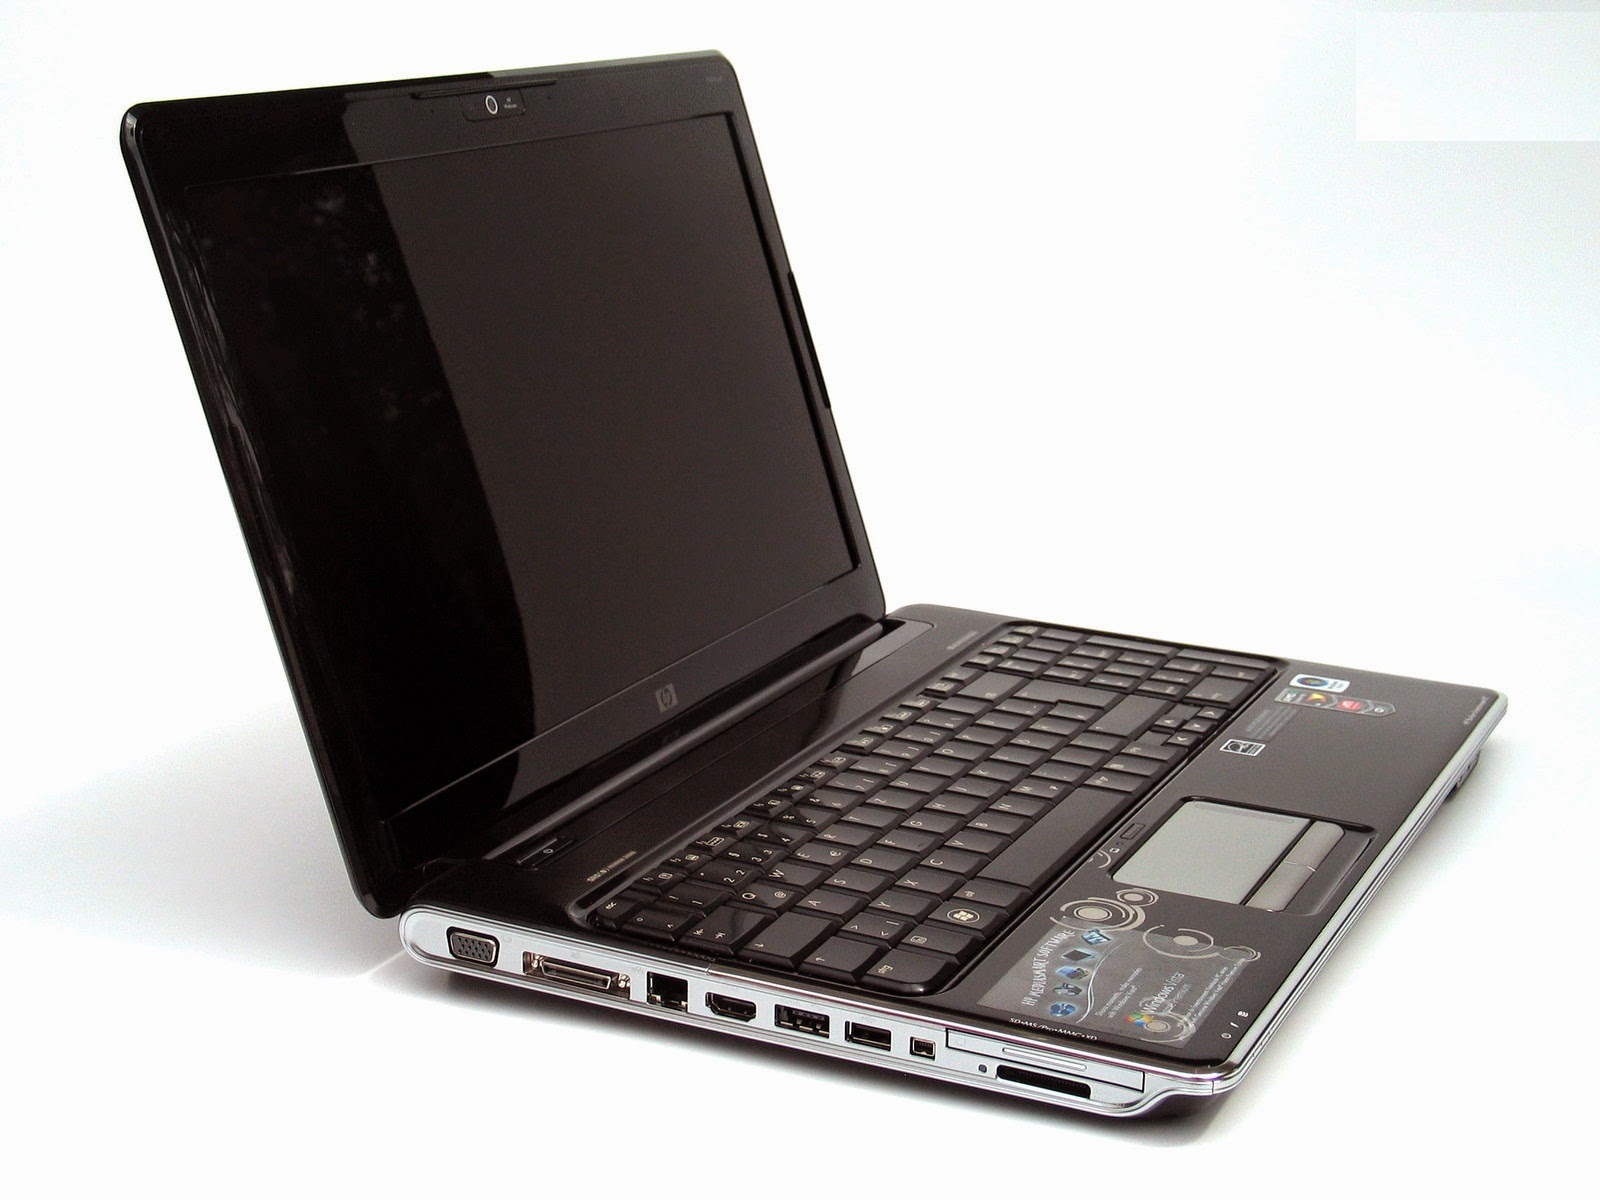 HP Pavilion dv6-1199eg Laptop Price, Specification & Review 